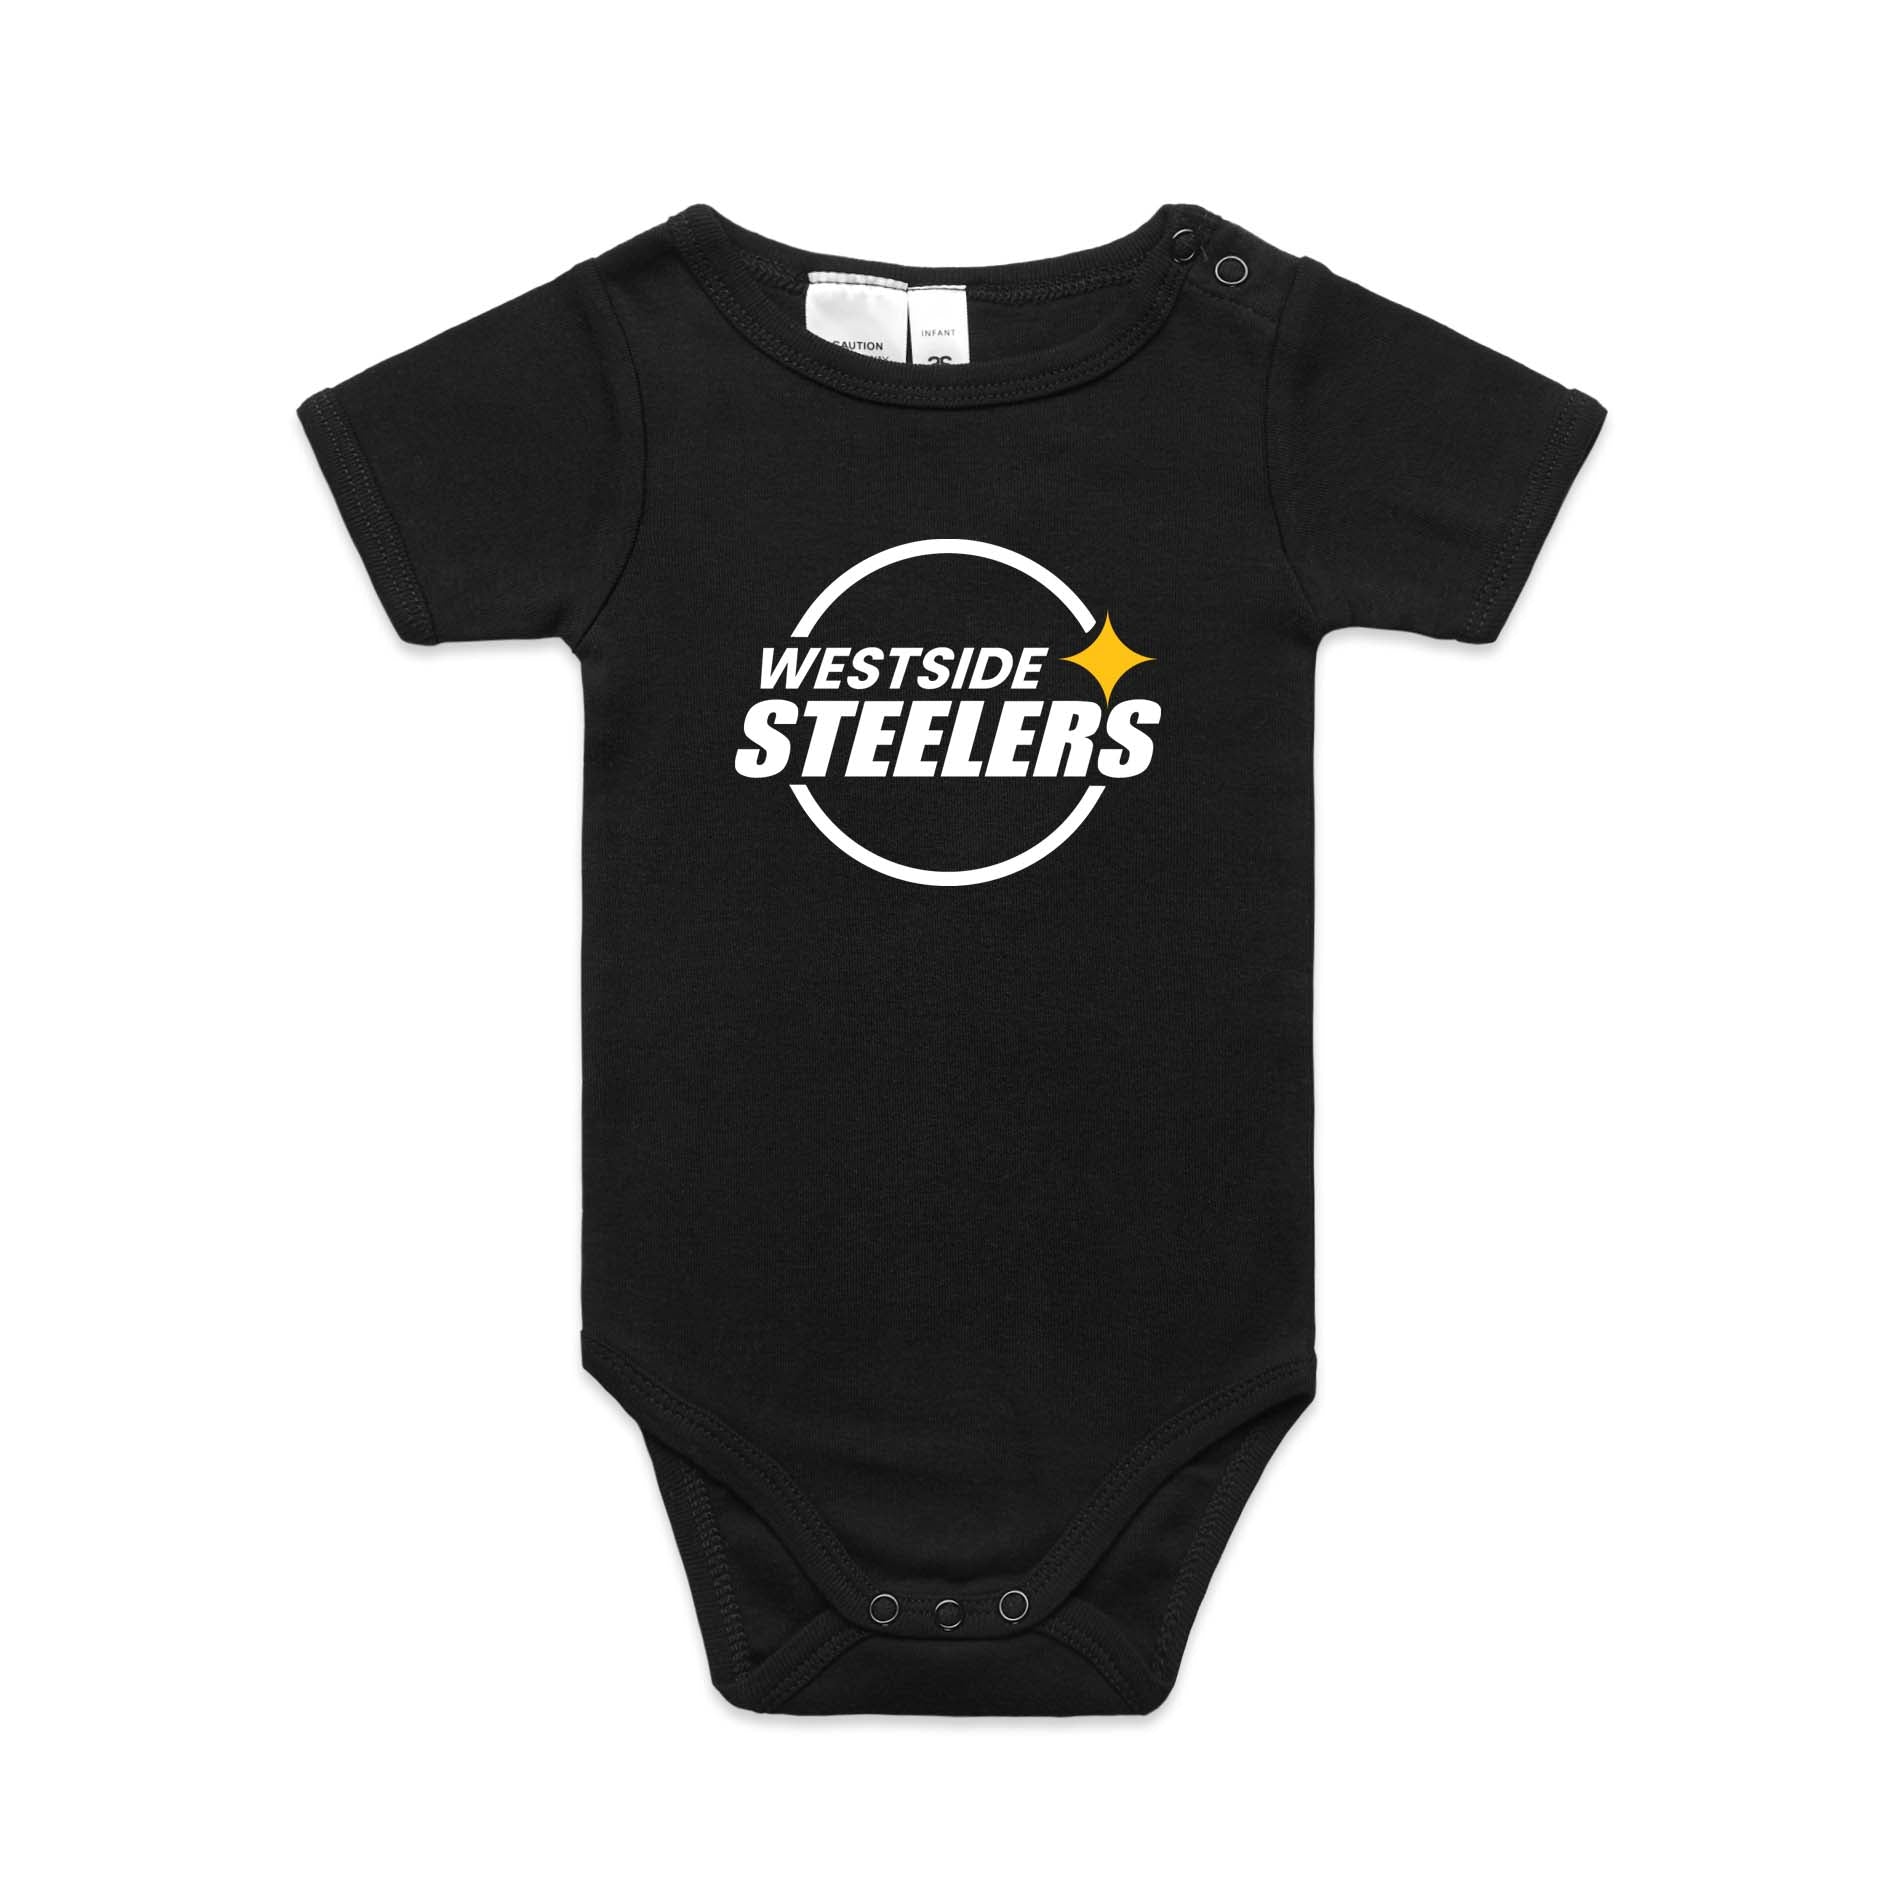 Westside Steelers baby one piece